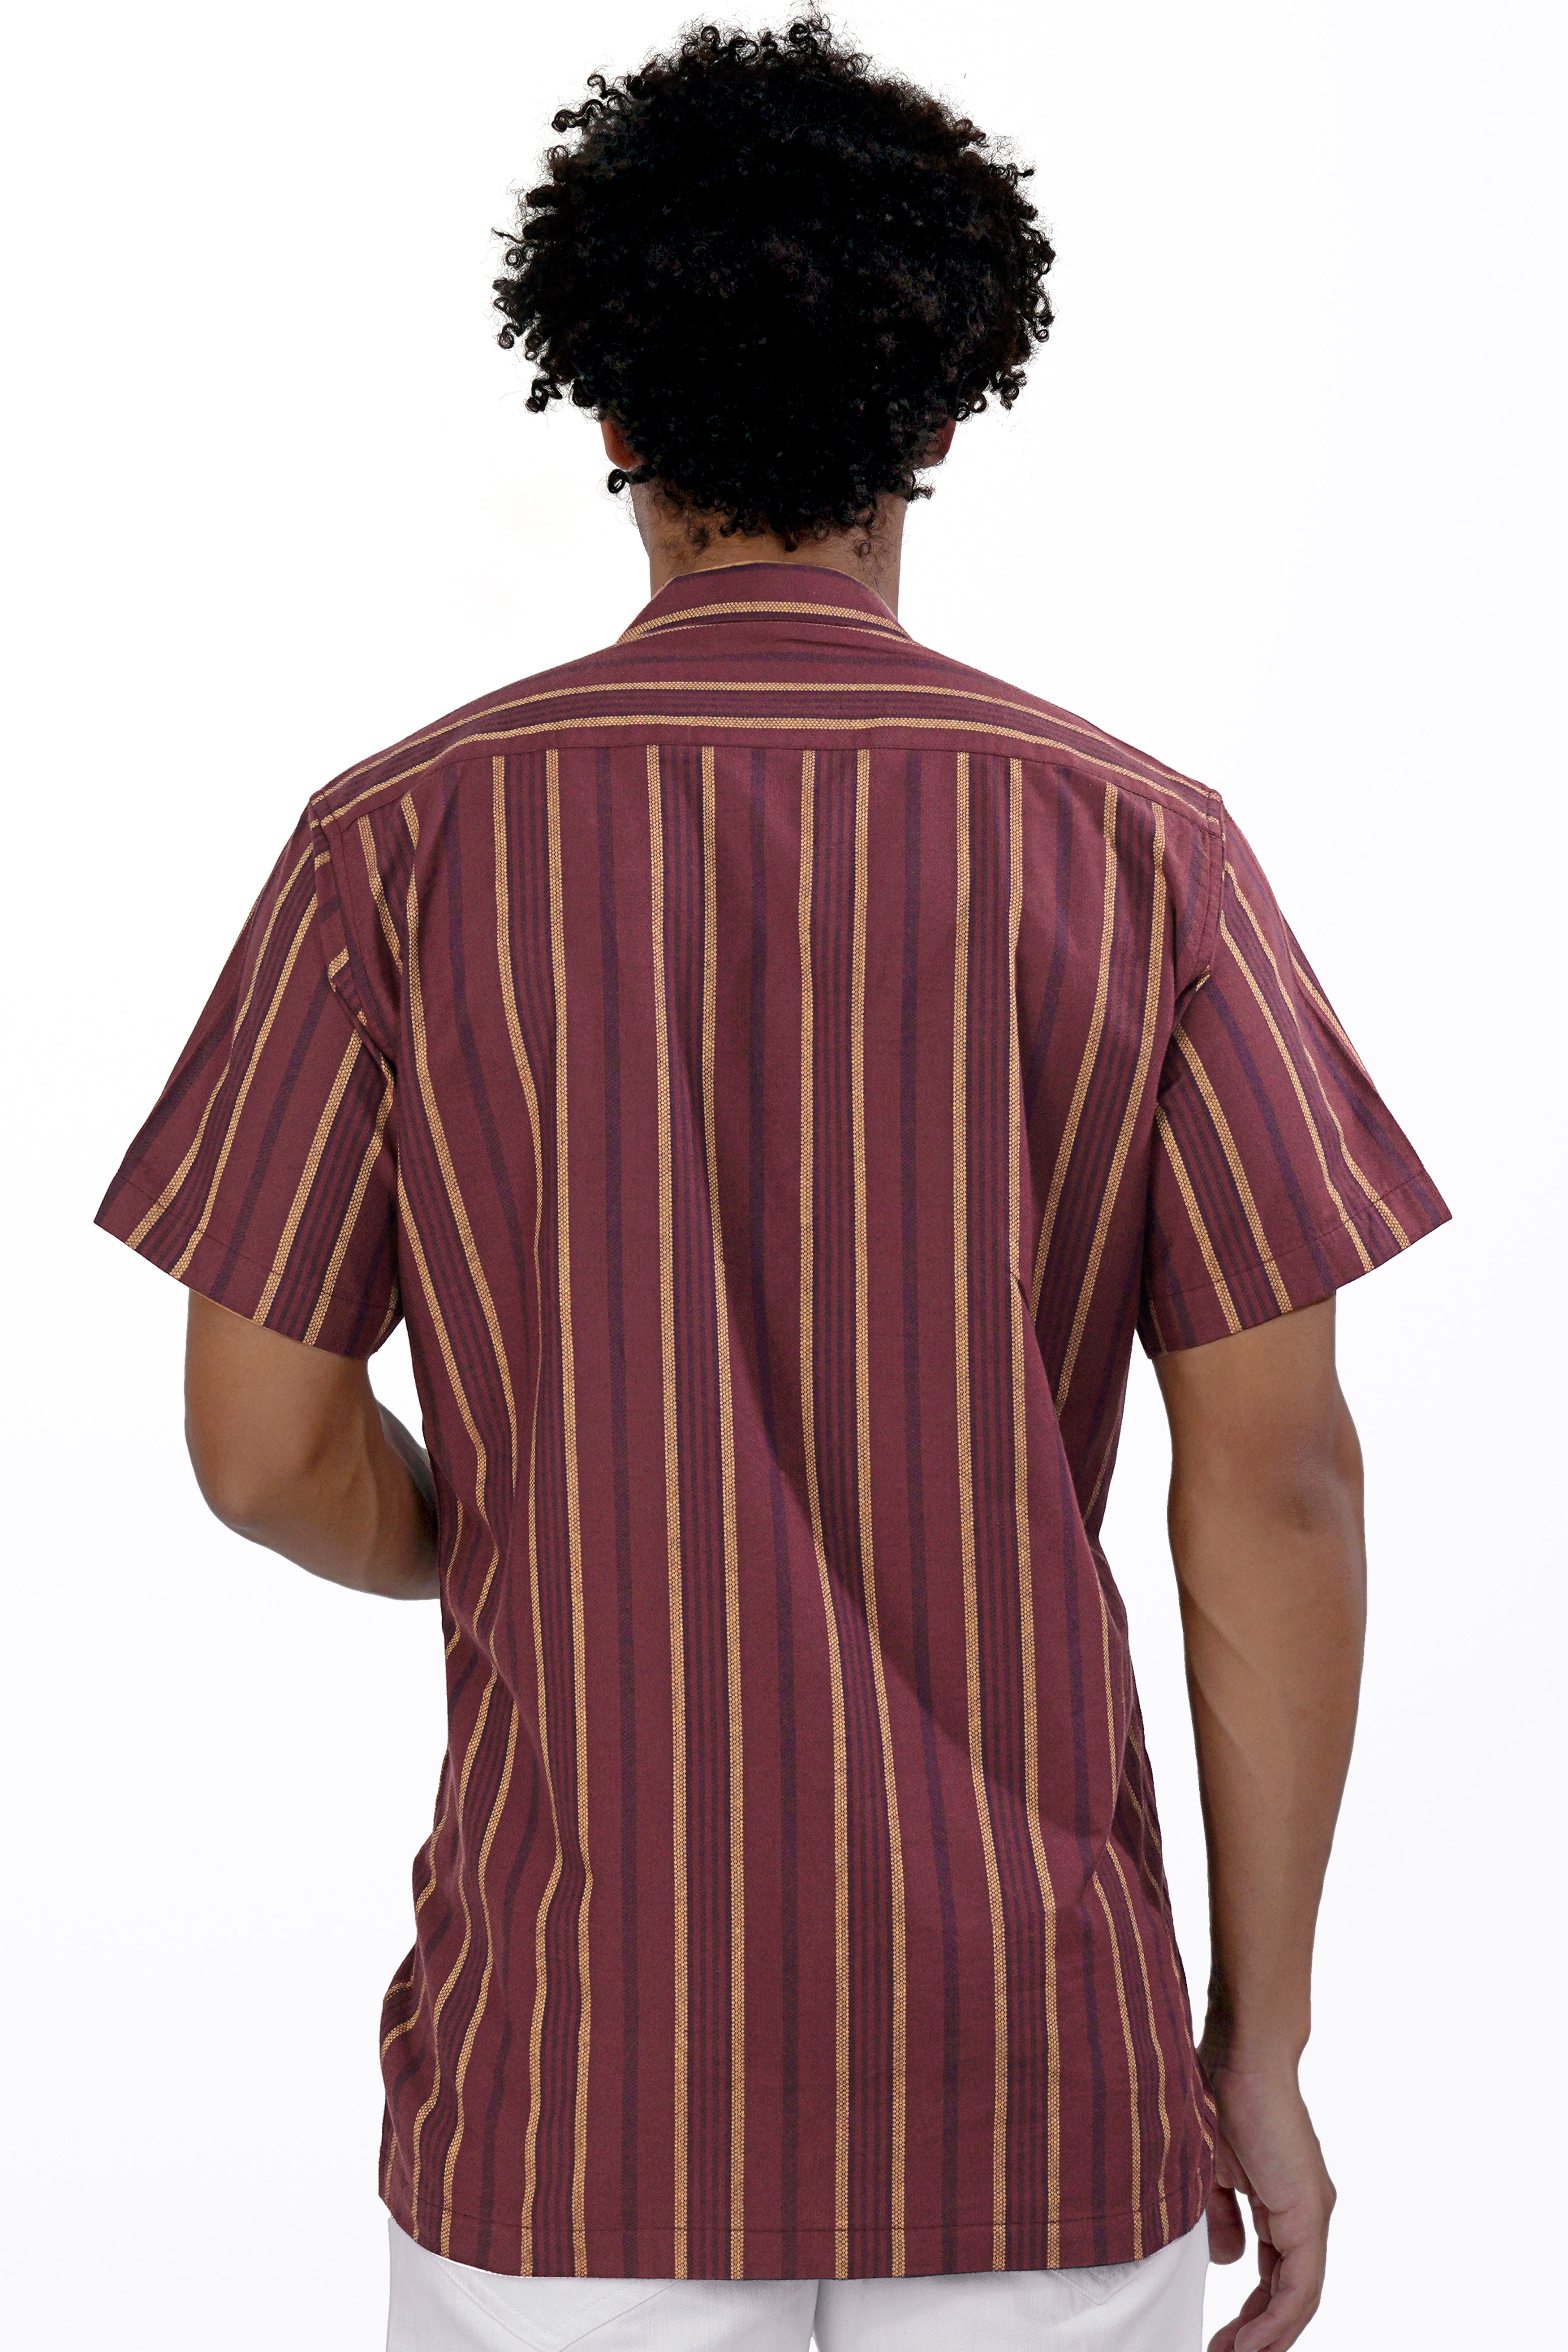 Congo Brown Multicolour Striped with Funky Patchwork Dobby Giza Cotton Designer Shirt 8747-CC-SS-E222-38, 8747-CC-SS-E222-H-38, 8747-CC-SS-E222-39, 8747-CC-SS-E222-H-39, 8747-CC-SS-E222-40, 8747-CC-SS-E222-H-40, 8747-CC-SS-E222-42, 8747-CC-SS-E222-H-42, 8747-CC-SS-E222-44, 8747-CC-SS-E222-H-44, 8747-CC-SS-E222-46, 8747-CC-SS-E222-H-46, 8747-CC-SS-E222-48, 8747-CC-SS-E222-H-48, 8747-CC-SS-E222-50, 8747-CC-SS-E222-H-50, 8747-CC-SS-E222-52, 8747-CC-SS-E222-H-52